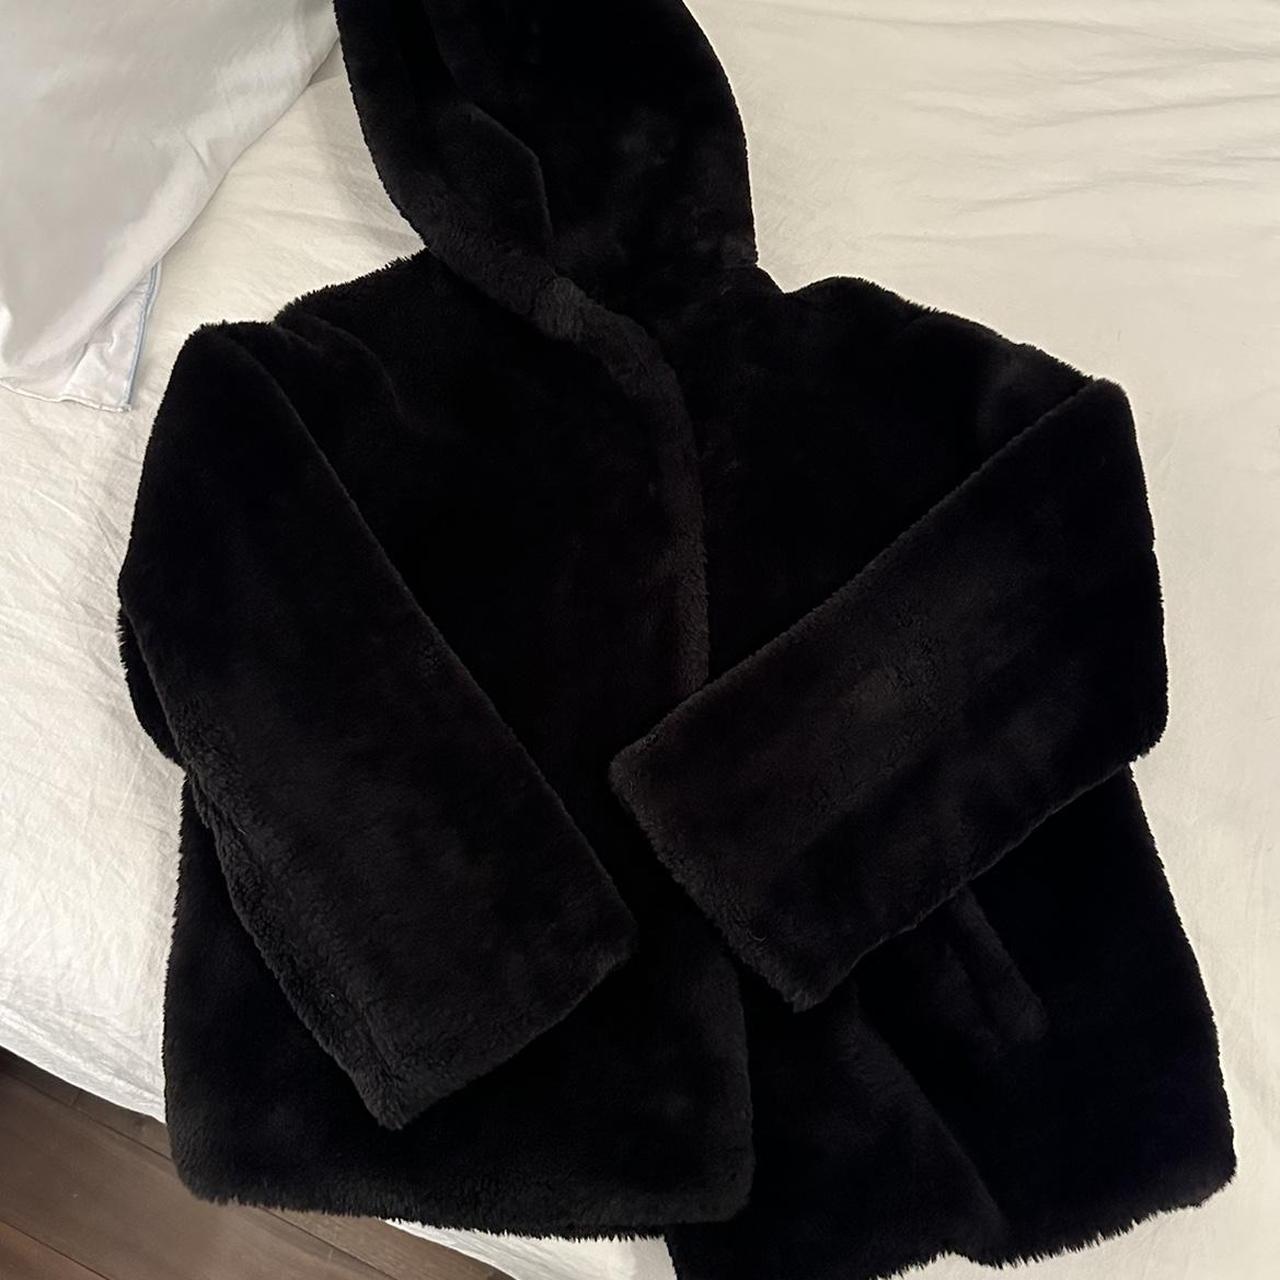 Zara faux fur jacket Size M Super sexy and... - Depop